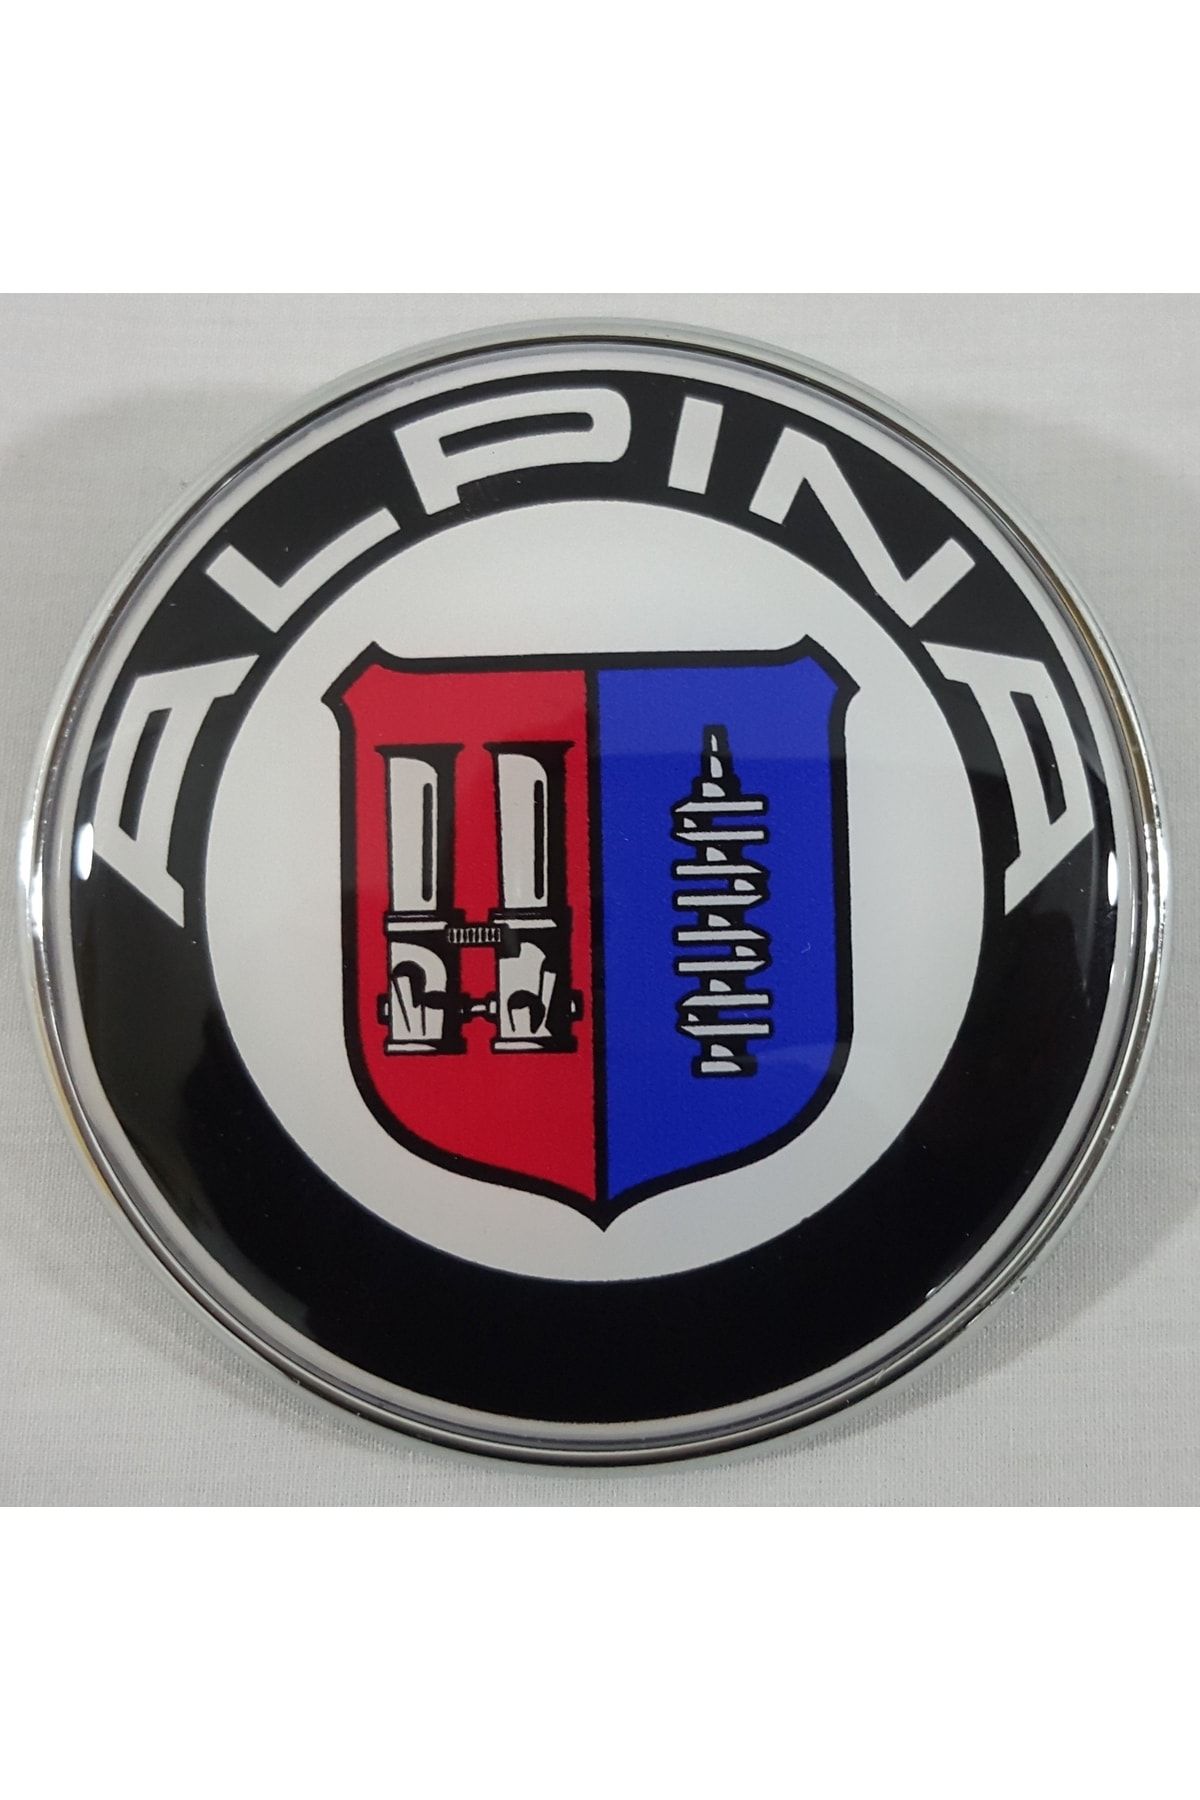 Emblema Pasta Capo BMW 82mm